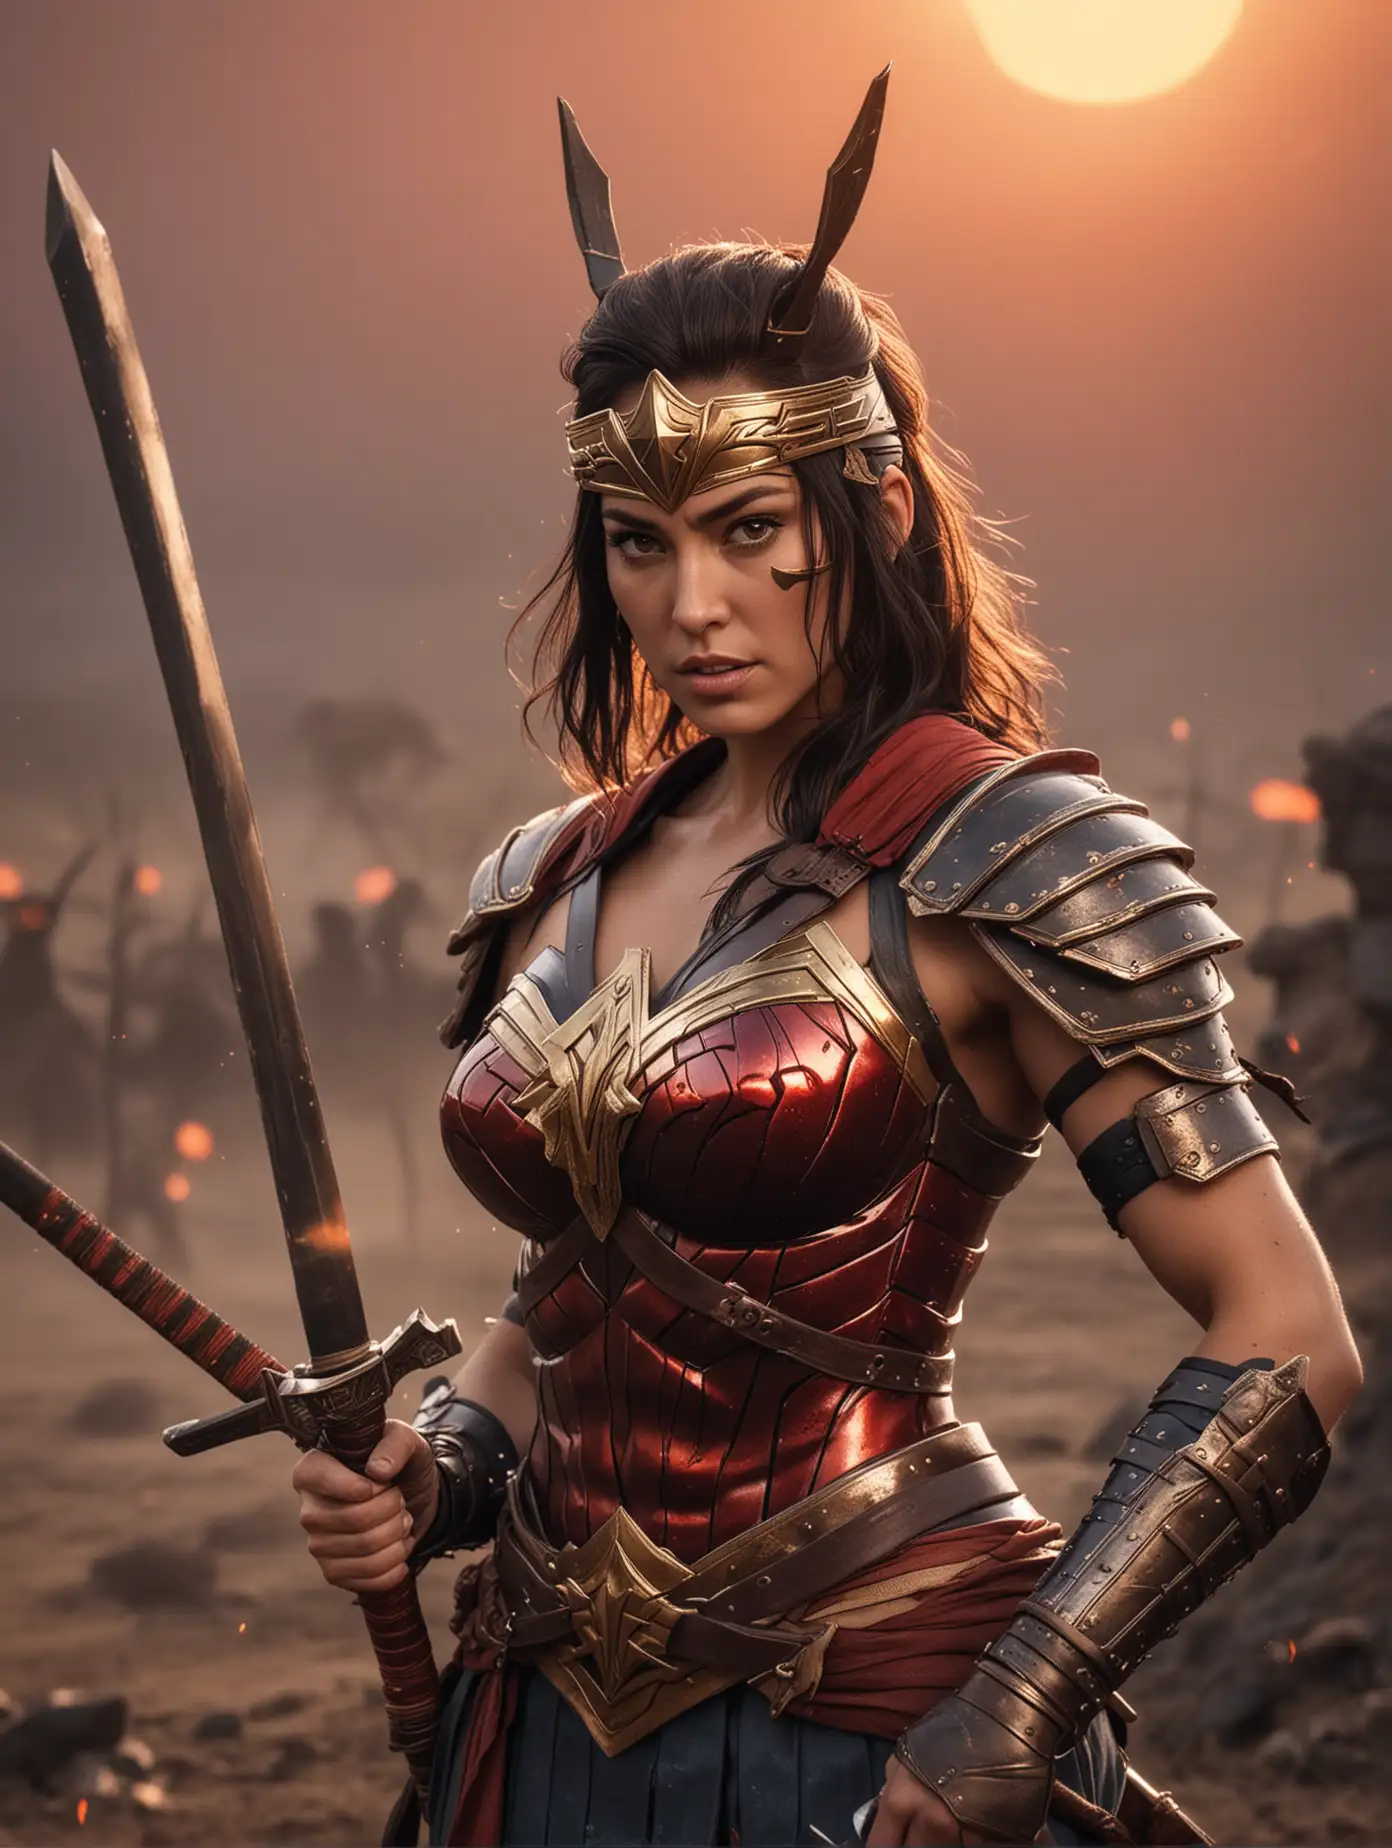 Muscular Wonder Woman as Samurai in Burning Battlefield